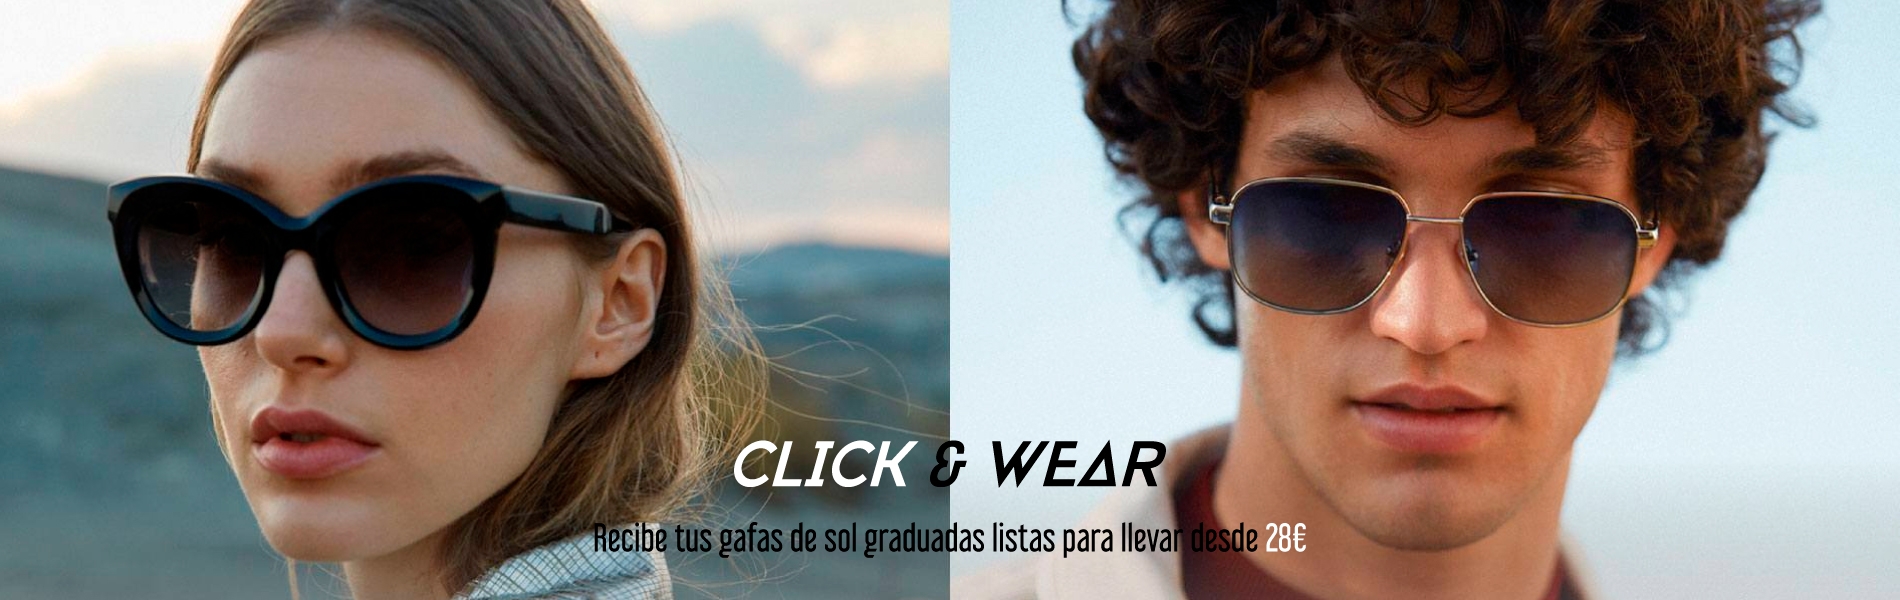 Click & Wear